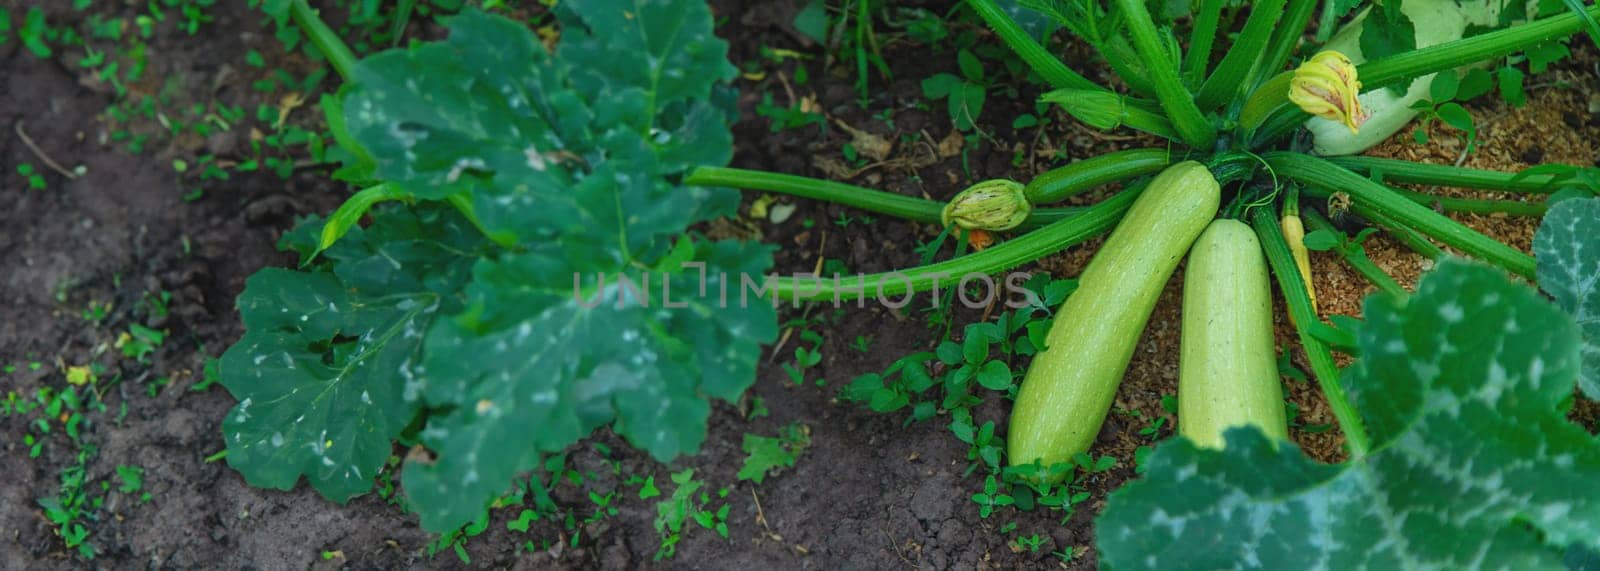 Zucchini harvest growing in the garden. Selective focus. by yanadjana